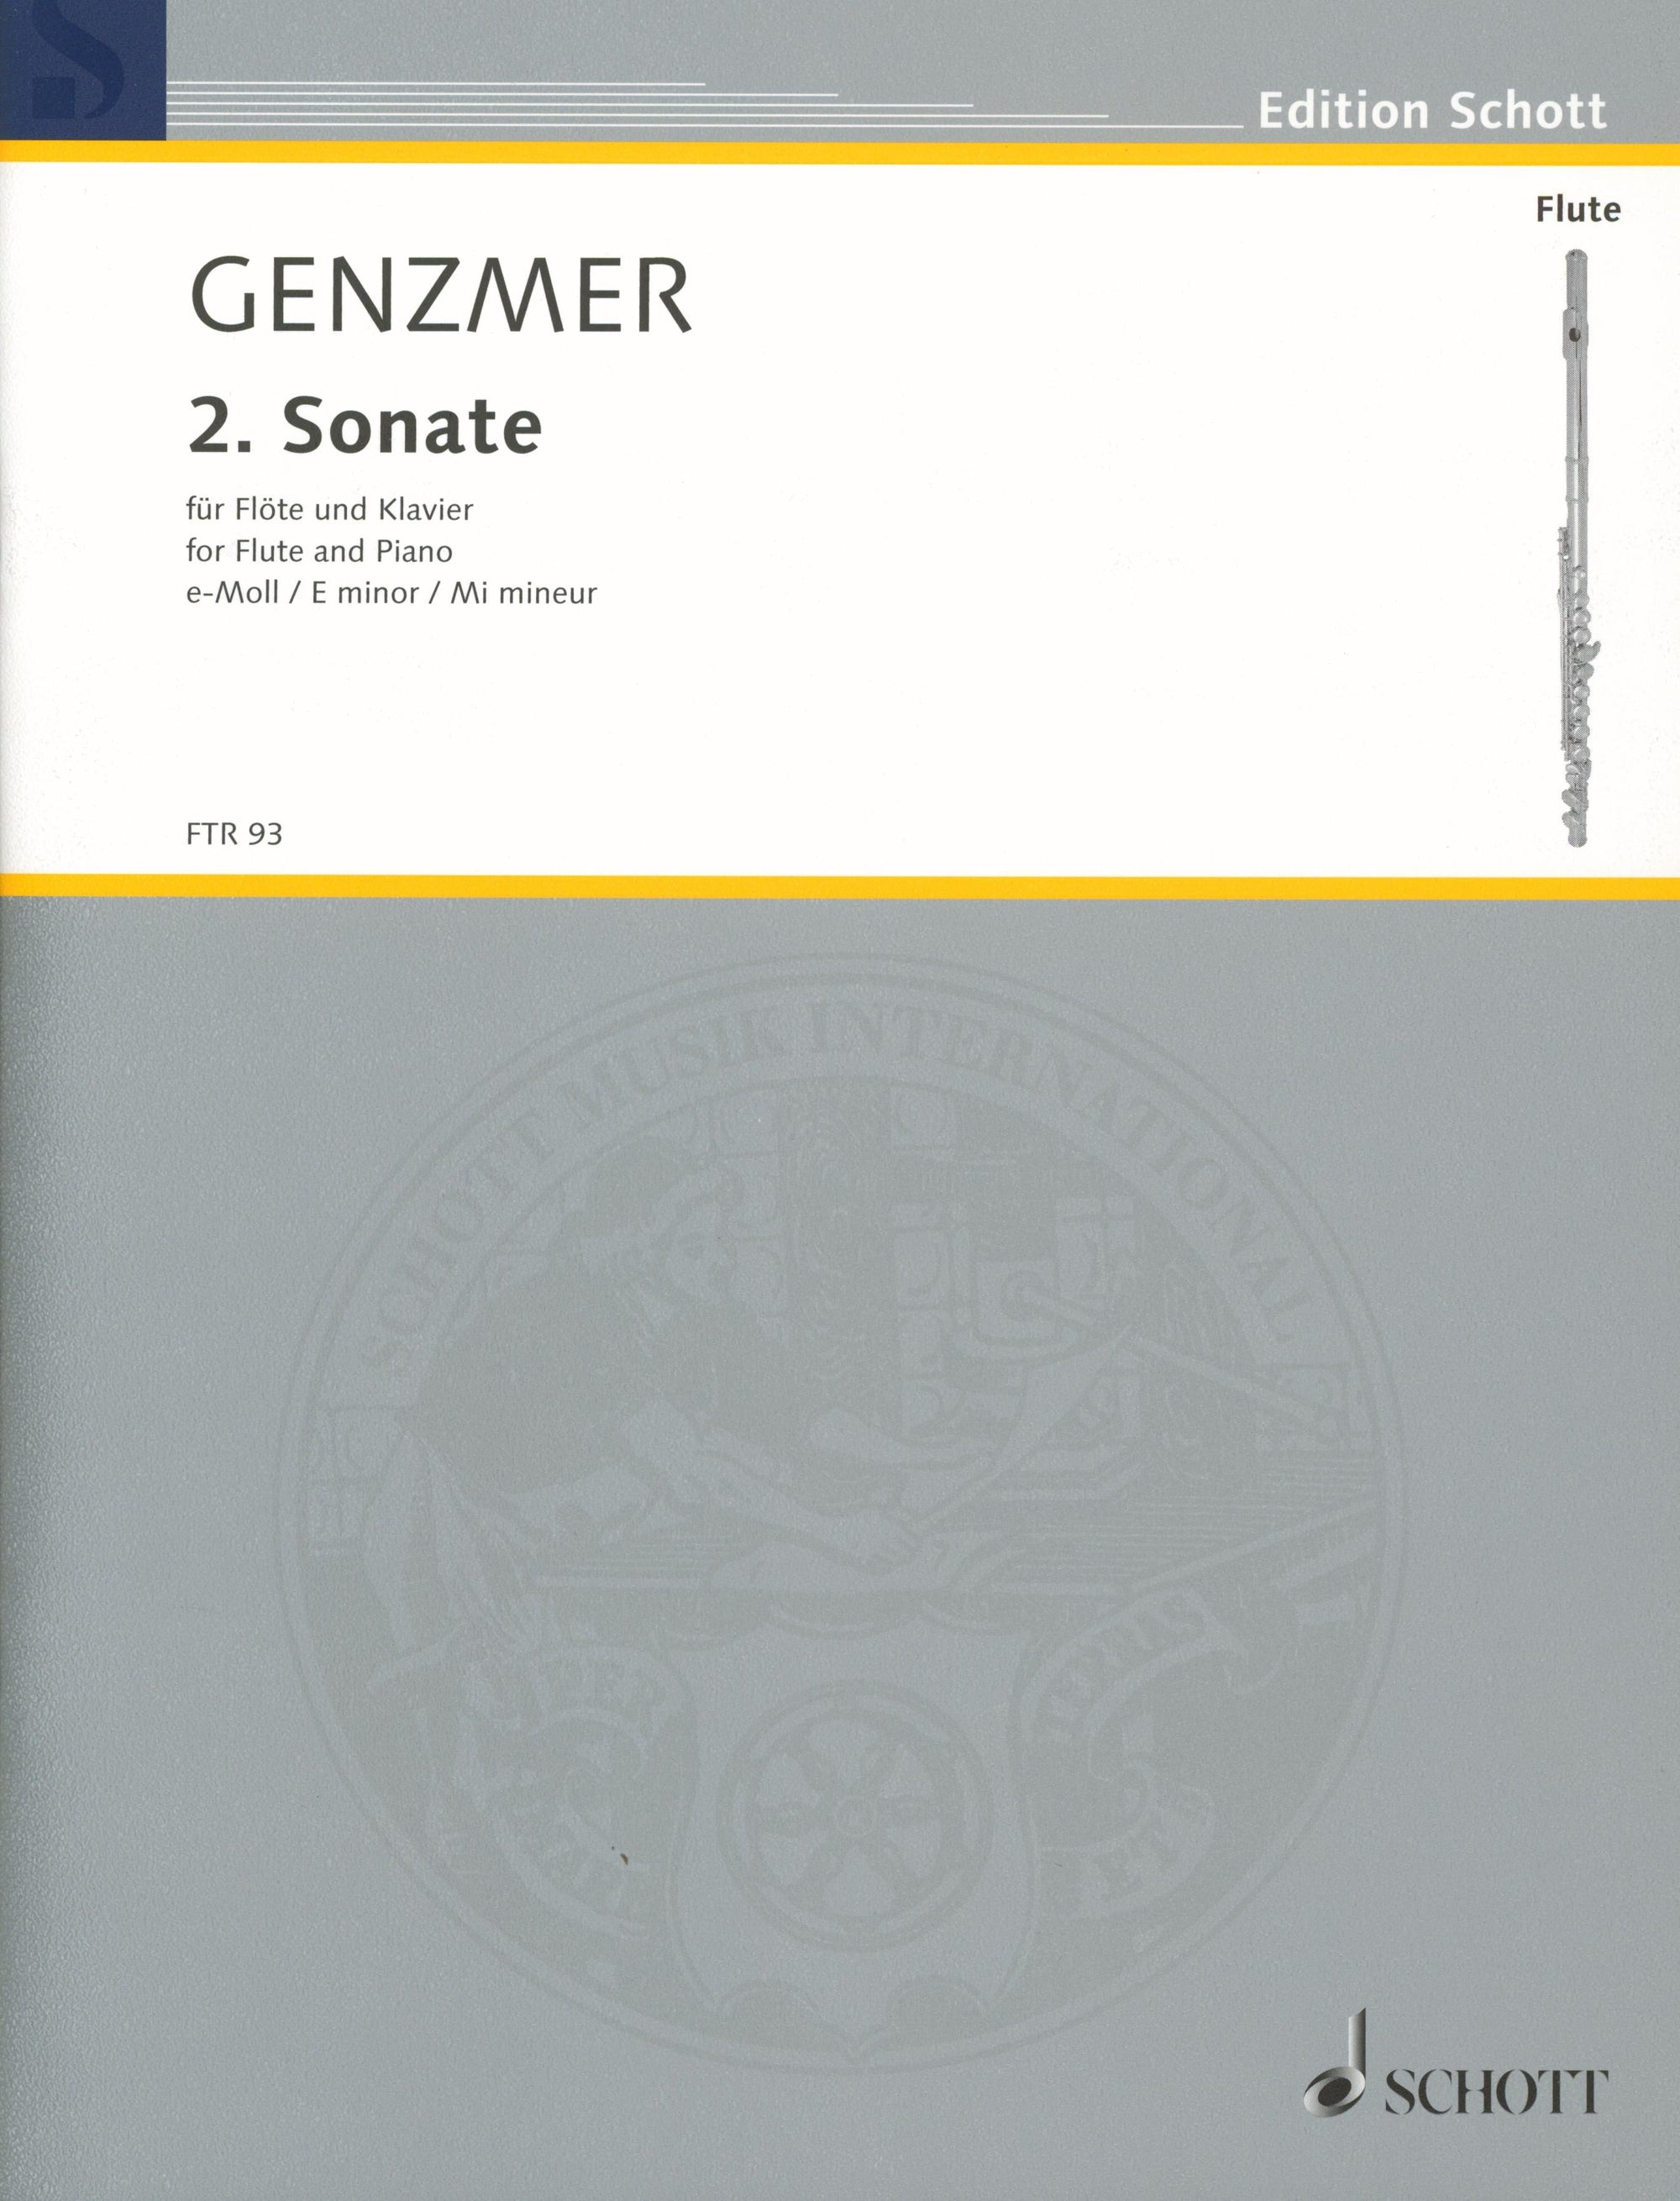 Genzmer: Flute Sonata No. 2 in E Minor, GeWV 223